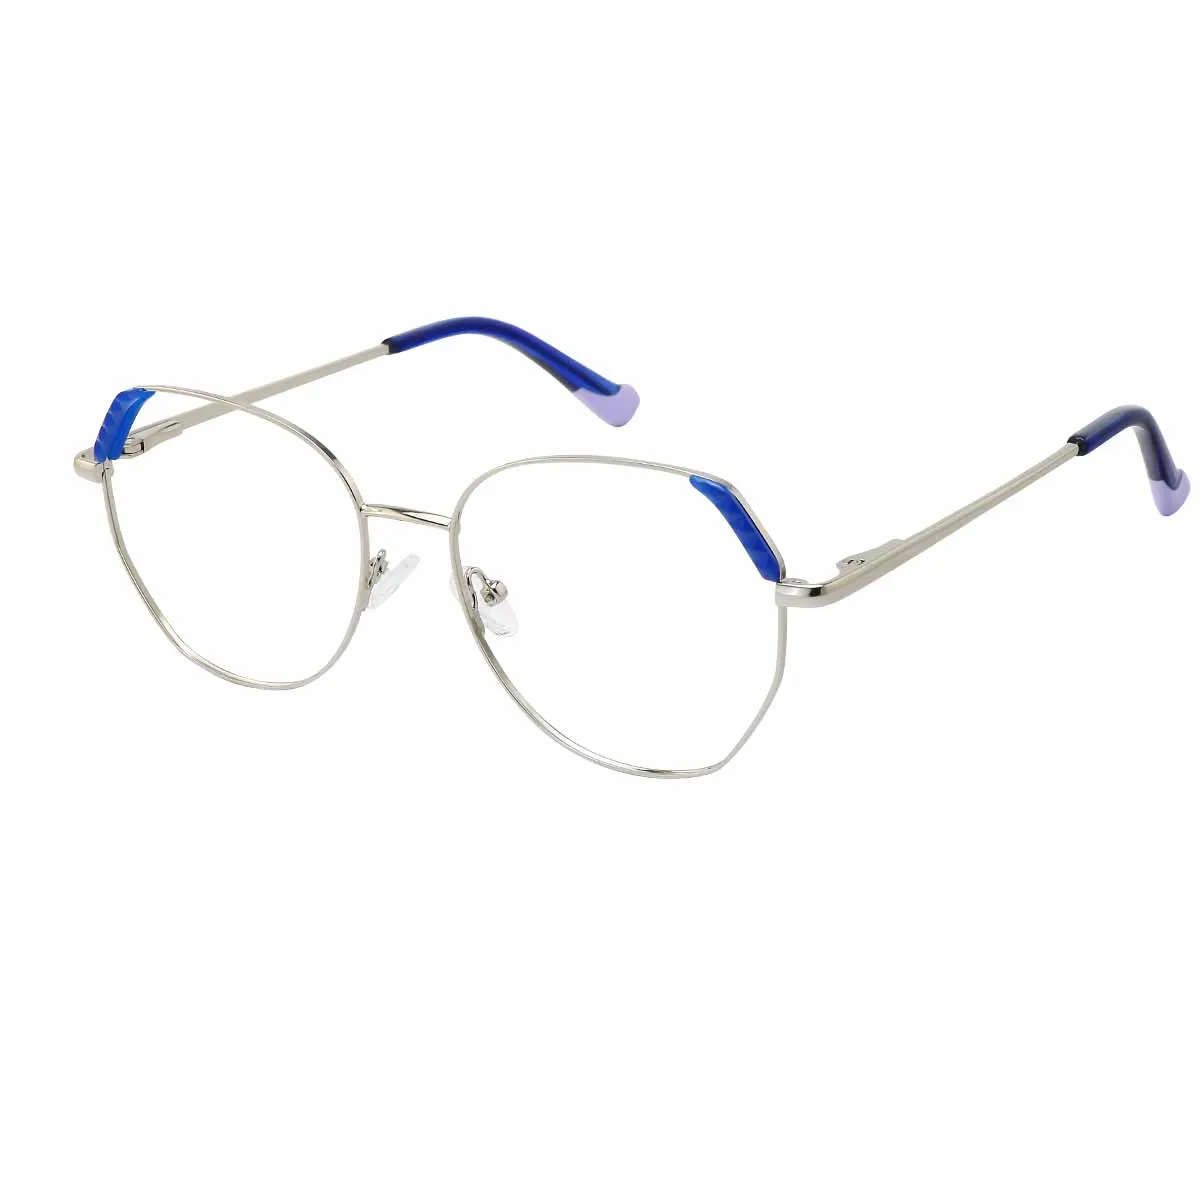 Cora - Geometric Silver/Blue Glasses for Women